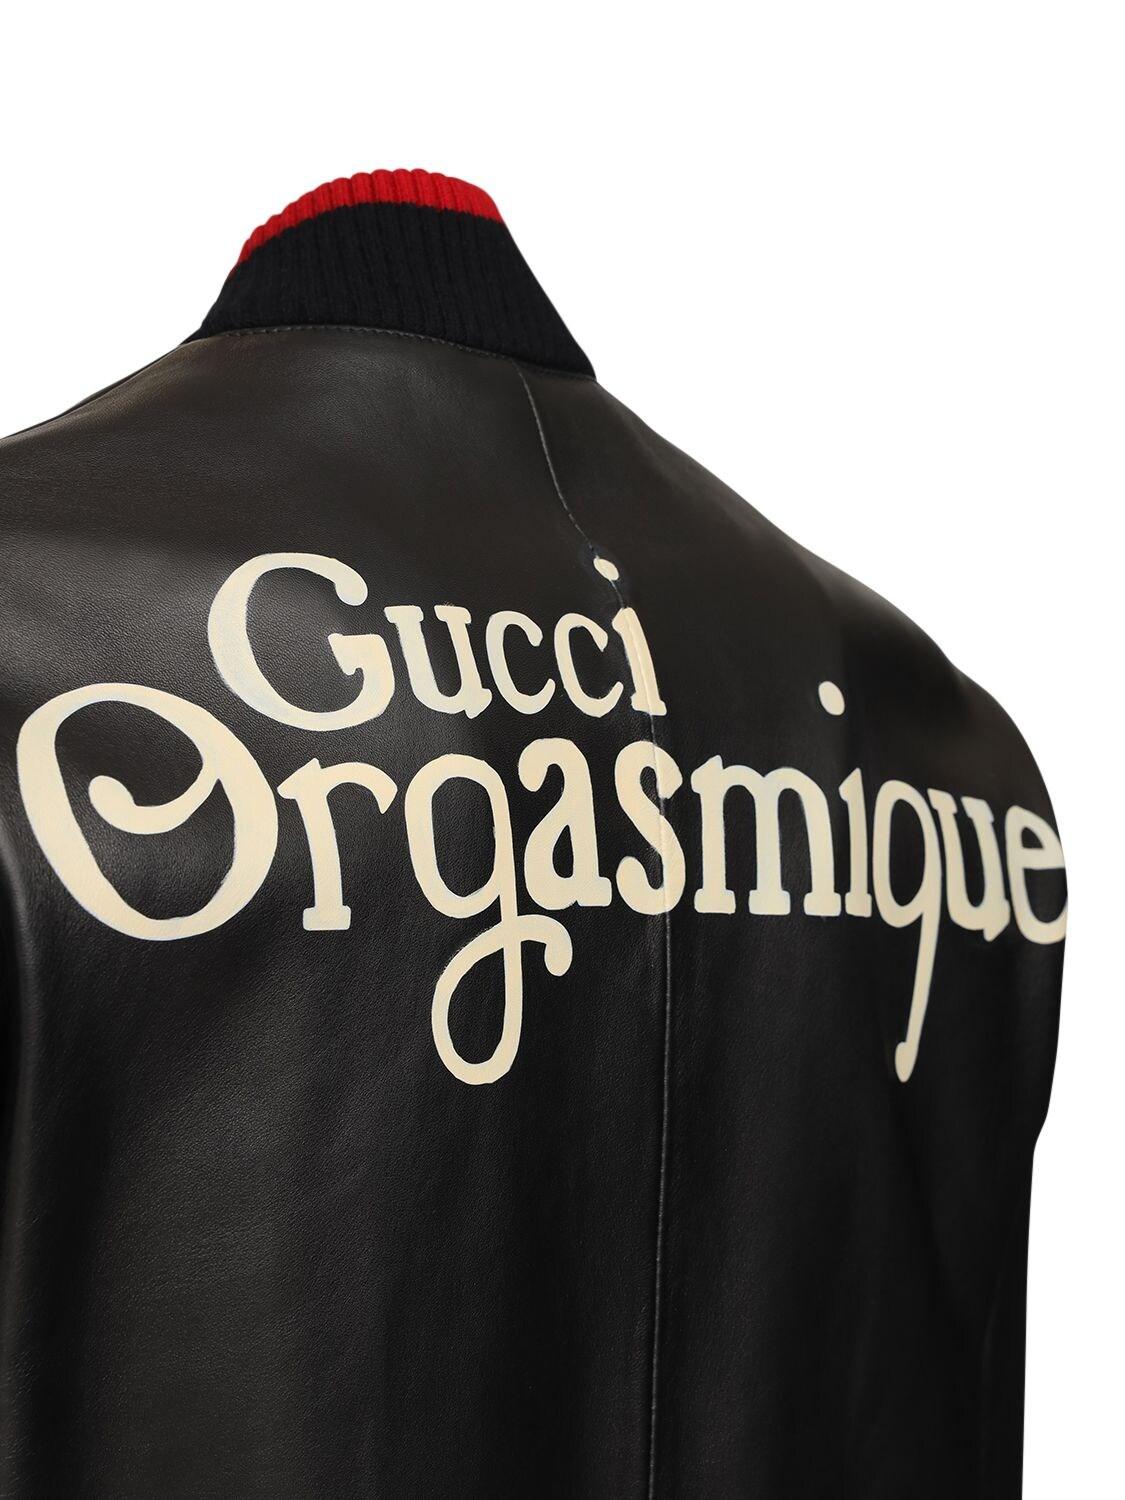 Gucci Orgasmique Soft Leather Bomber Jacket in Black for Men | Lyst